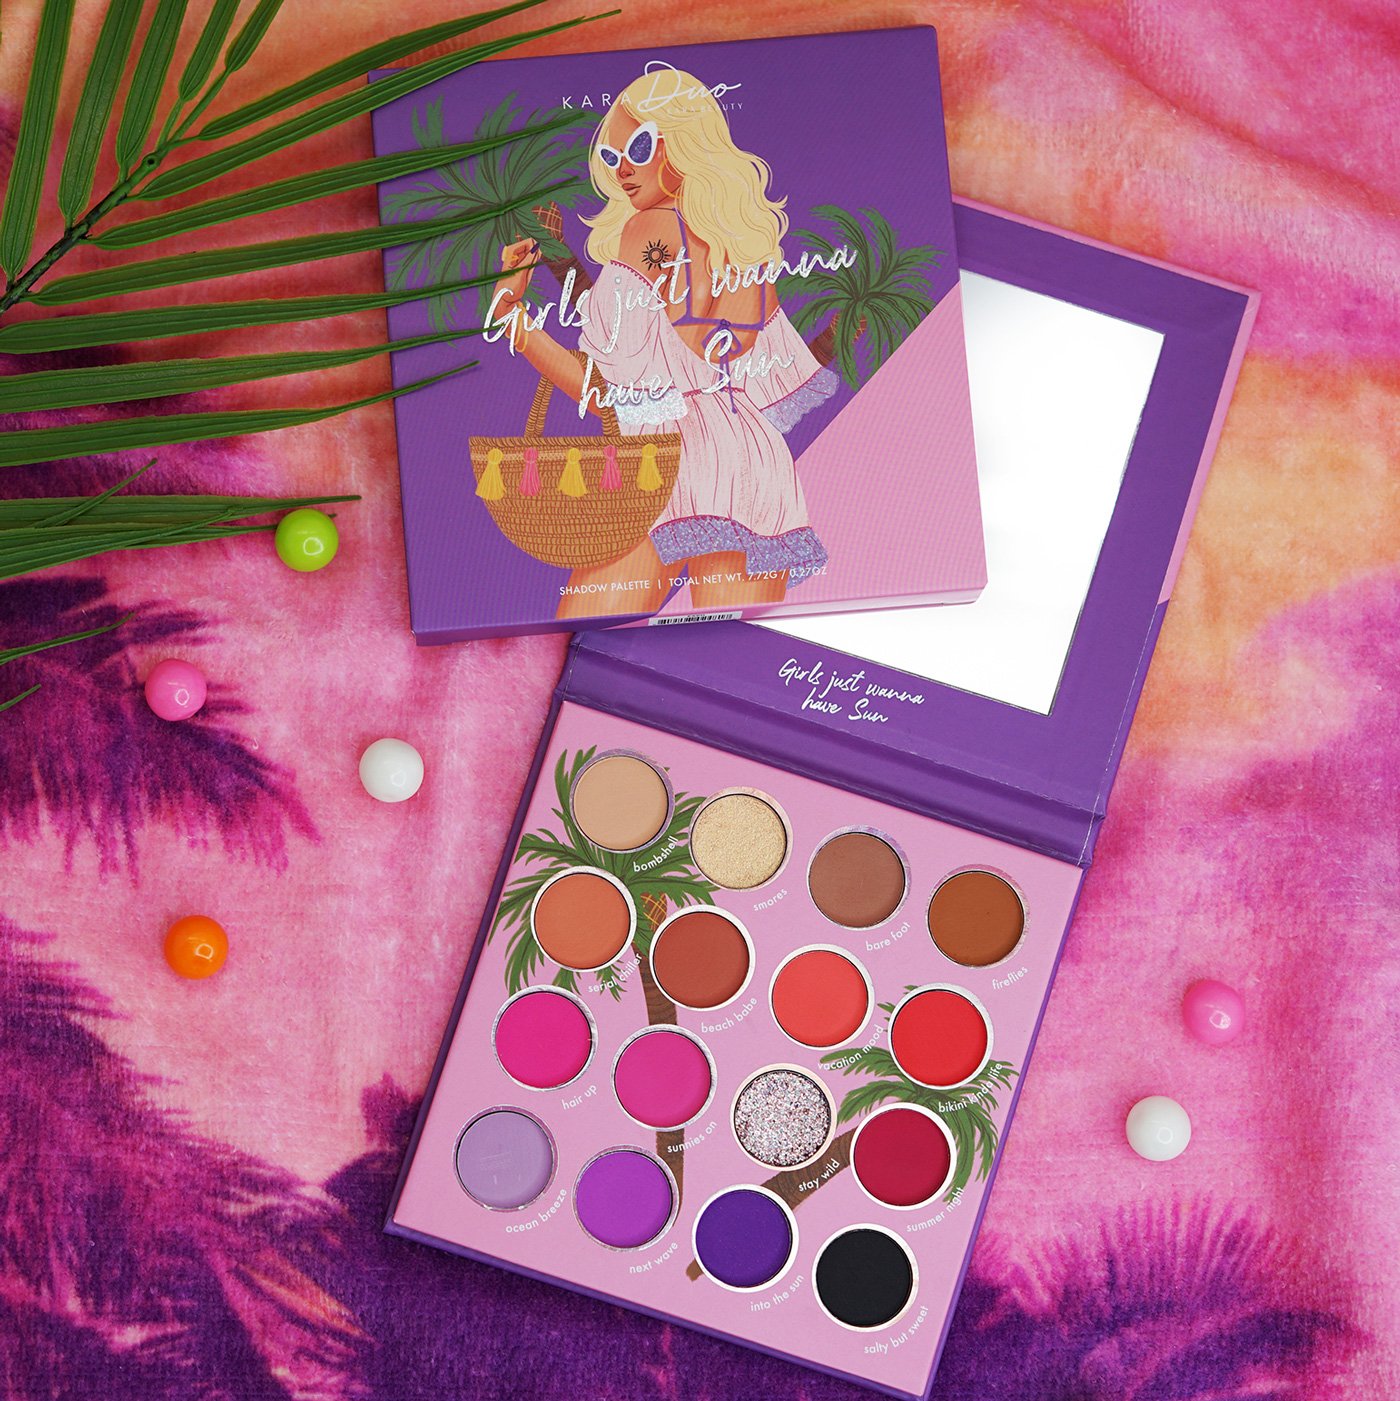 Kara Beauty's Girl Just Wanna have Sun beach-themed 16-Shade Multi-Finish Eyeshadow Palette